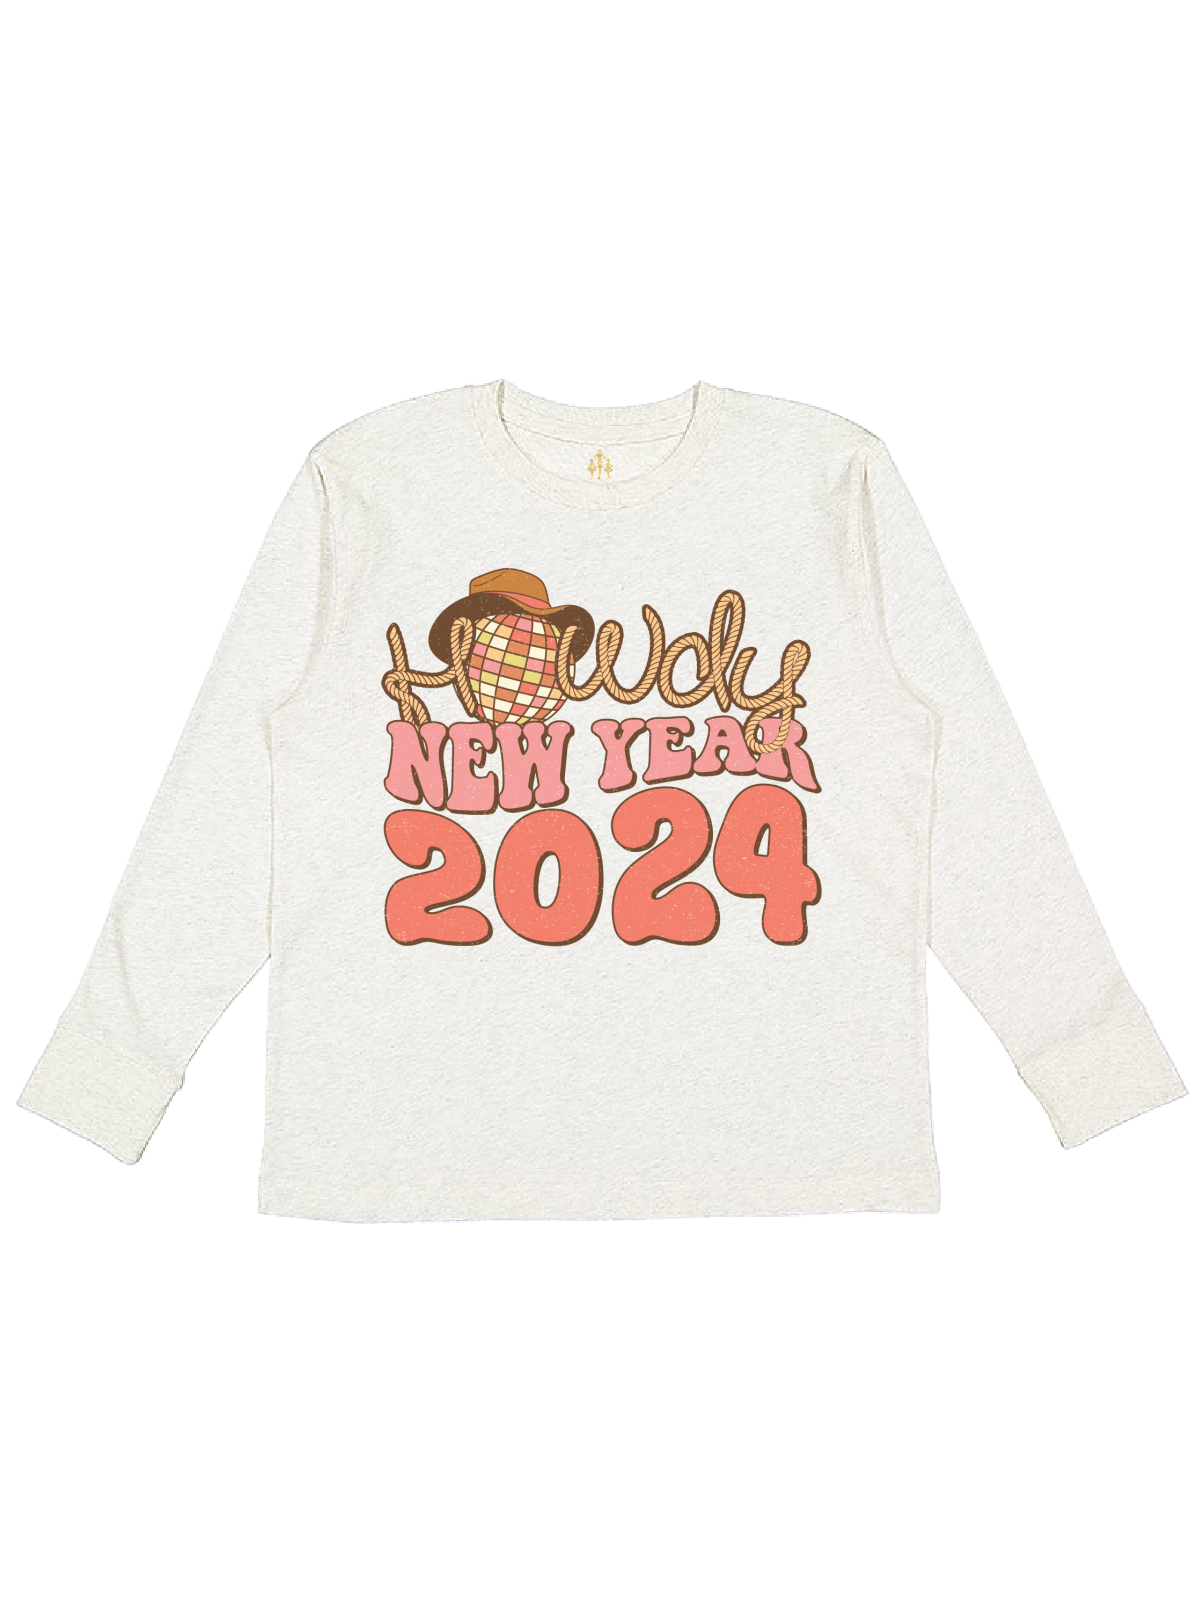 Howdy New Year 2024 Kids Long Sleeve Shirt